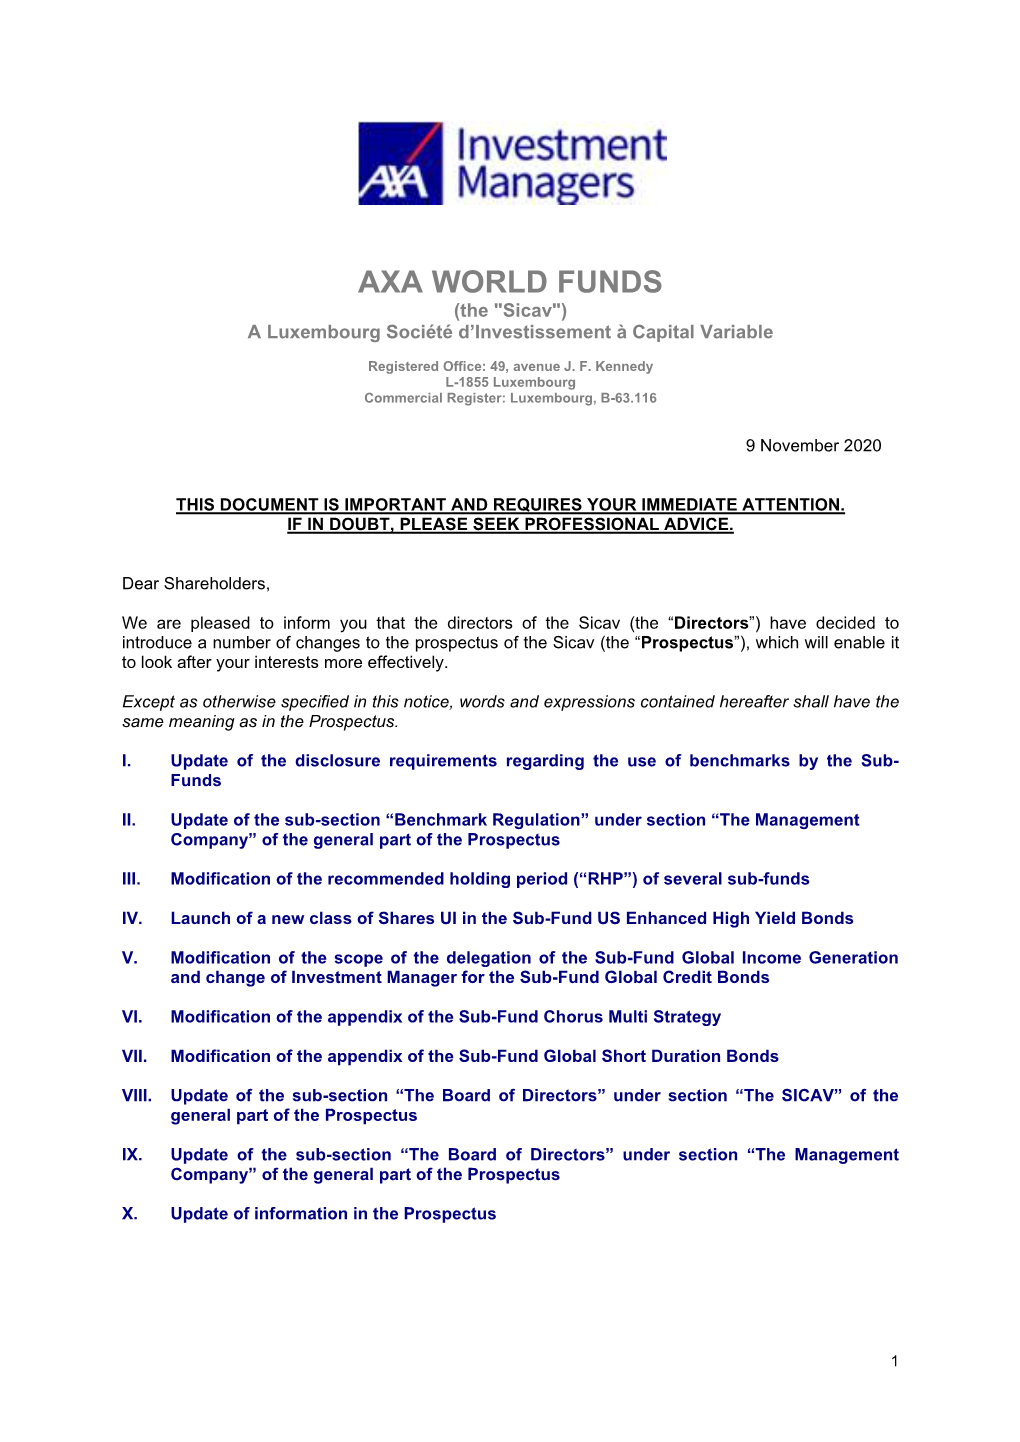 AXA WORLD FUNDS (The "Sicav") a Luxembourg Société D’Investissement À Capital Variable